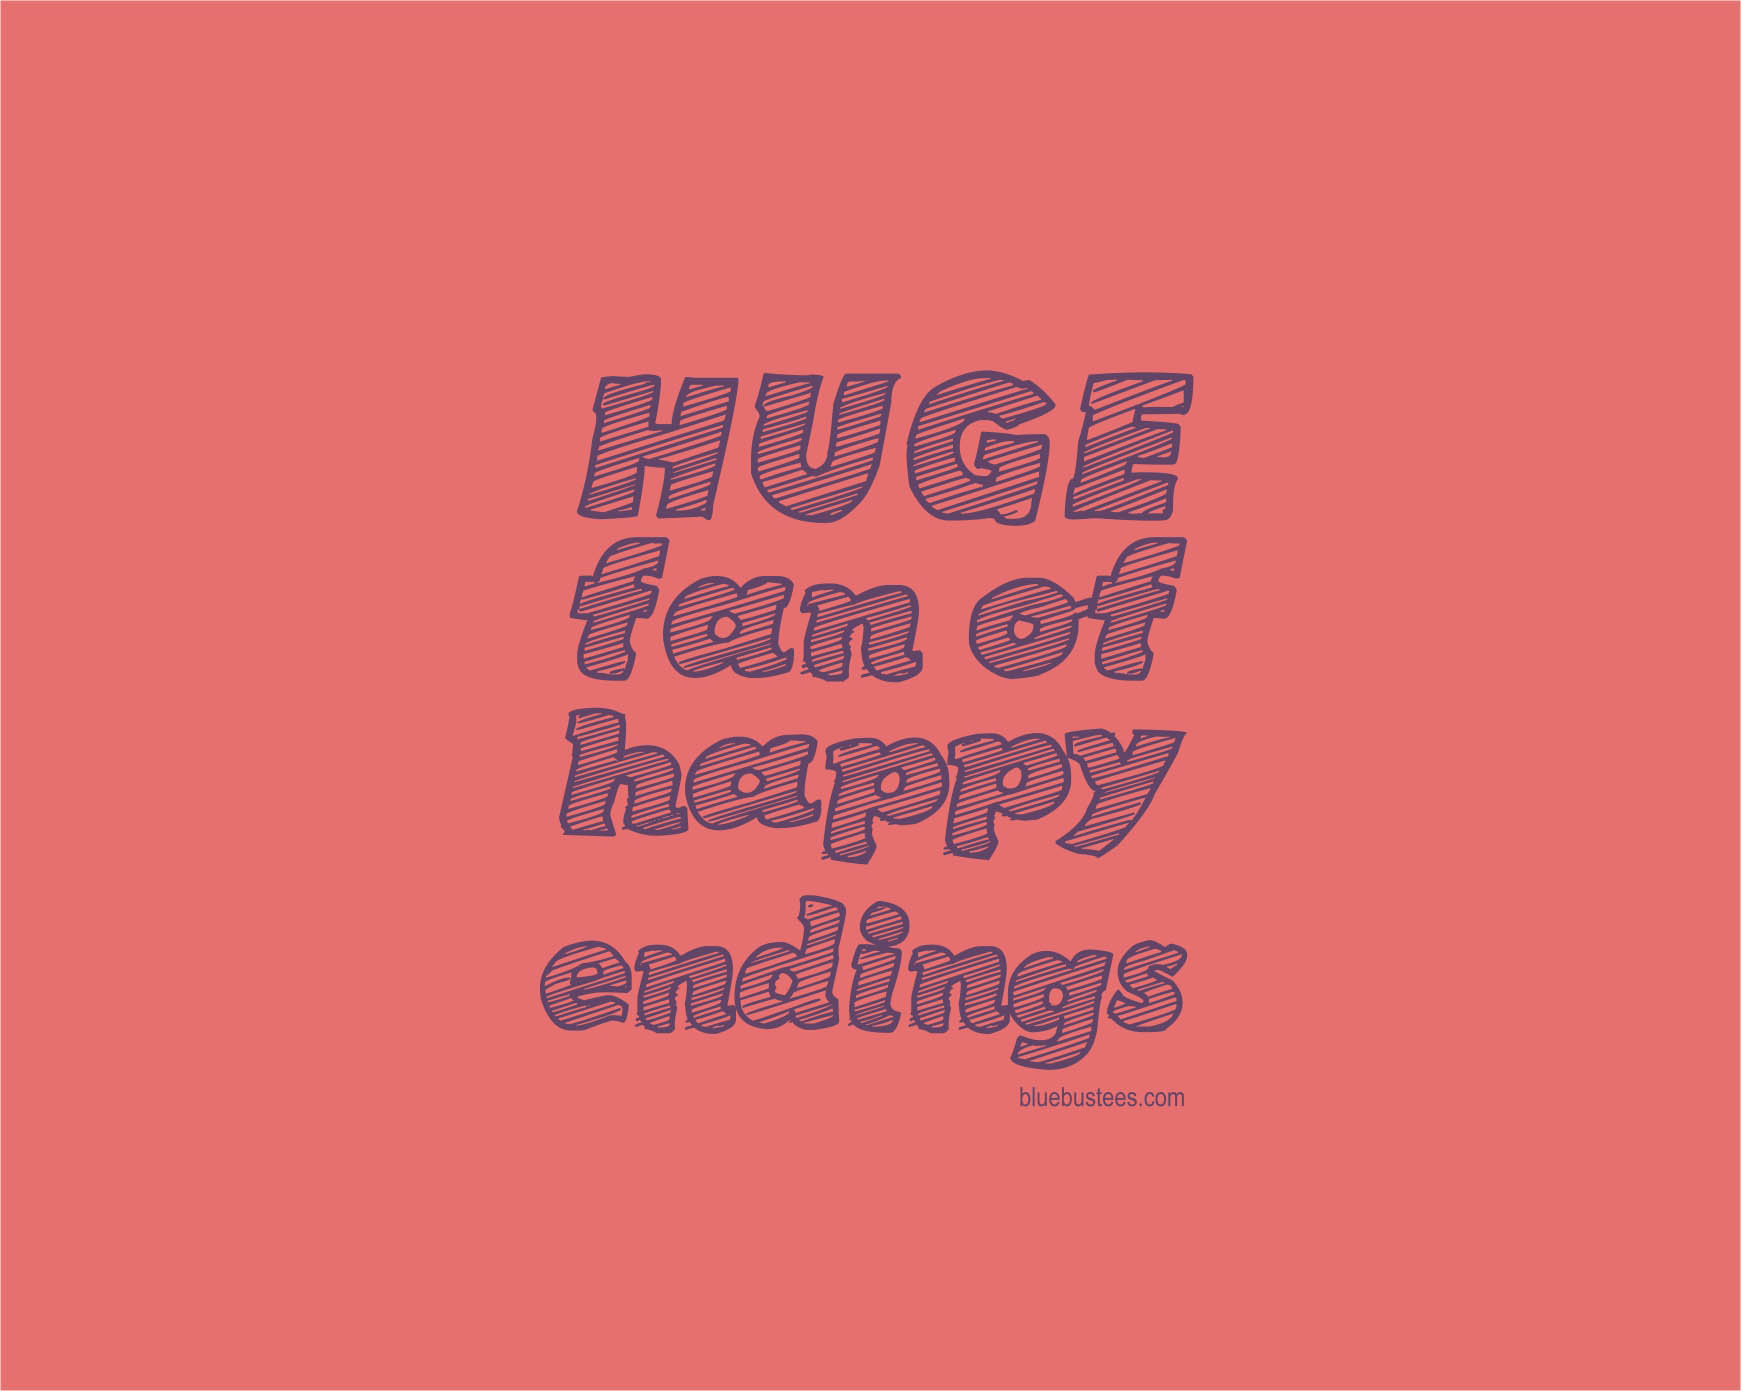 HAPPY-ENDING